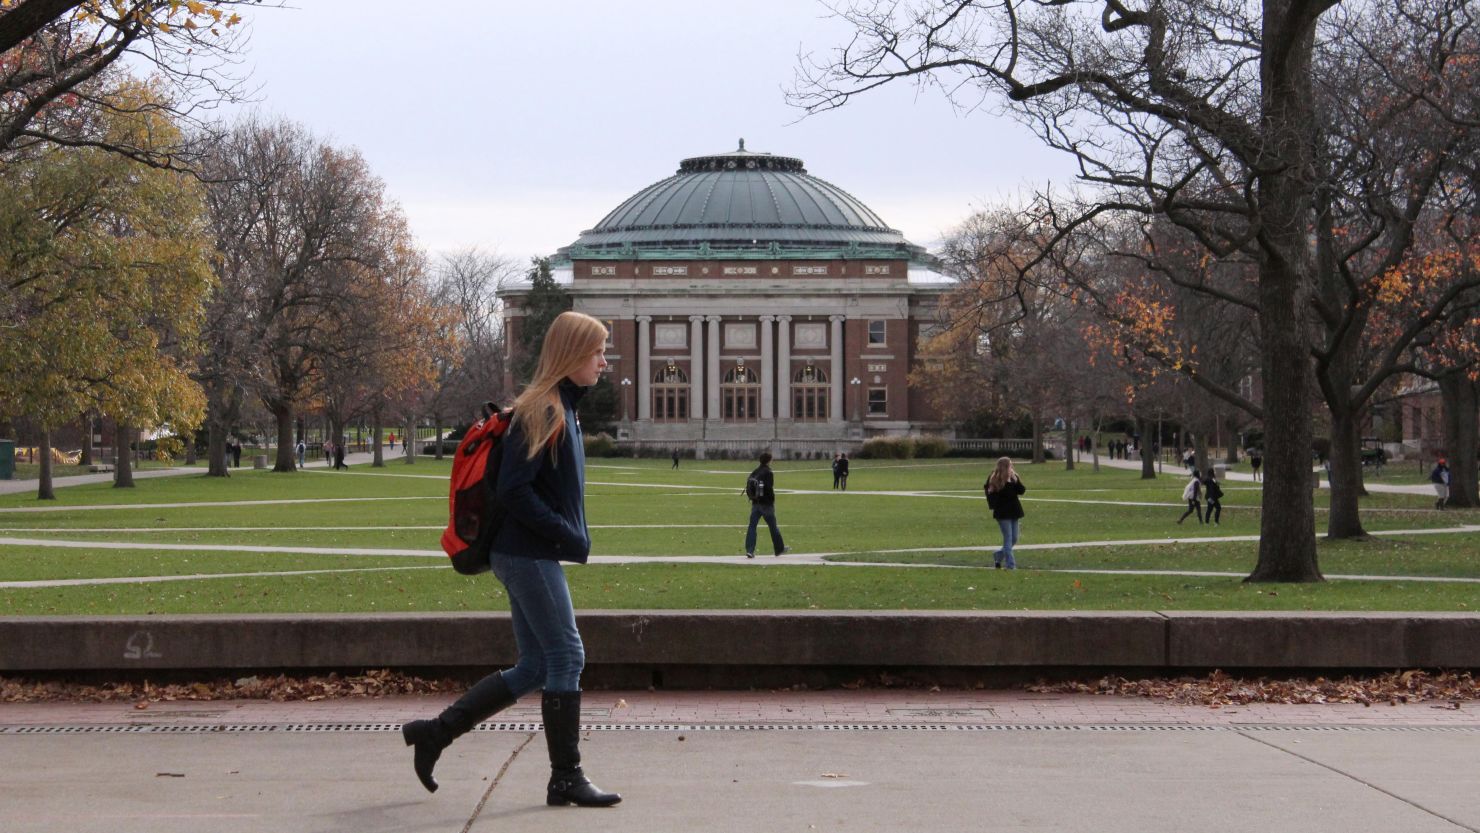  In this Nov. 20, 2015 photo, University of Illinois students walk across the Main Quad on campus in Urbana, Illinois.